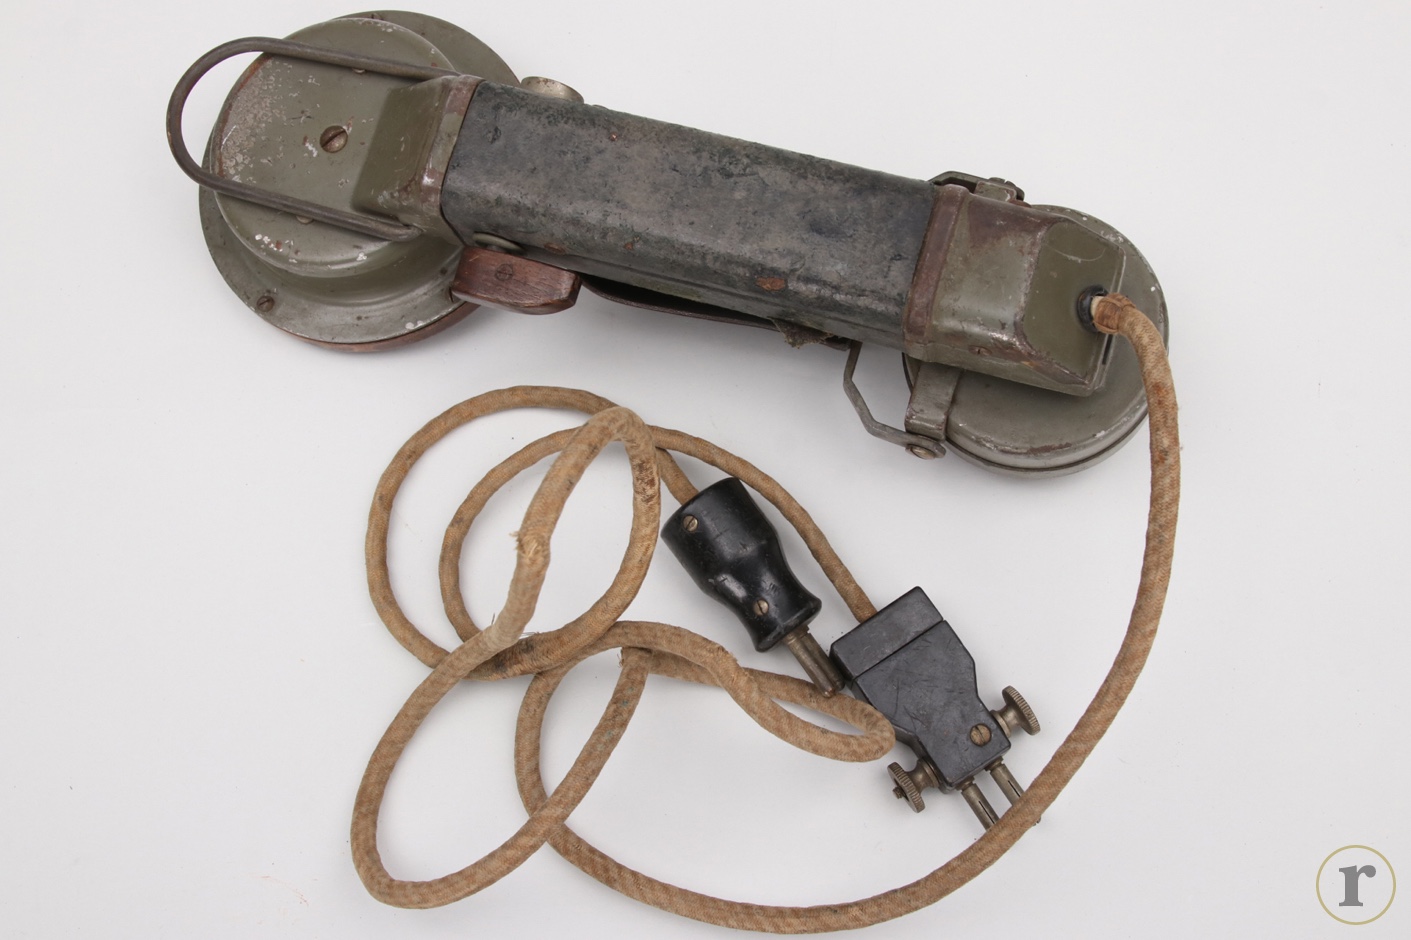 ratisbon's | WW1 German field telephone | DISCOVER GENUINE MILITARIA ...